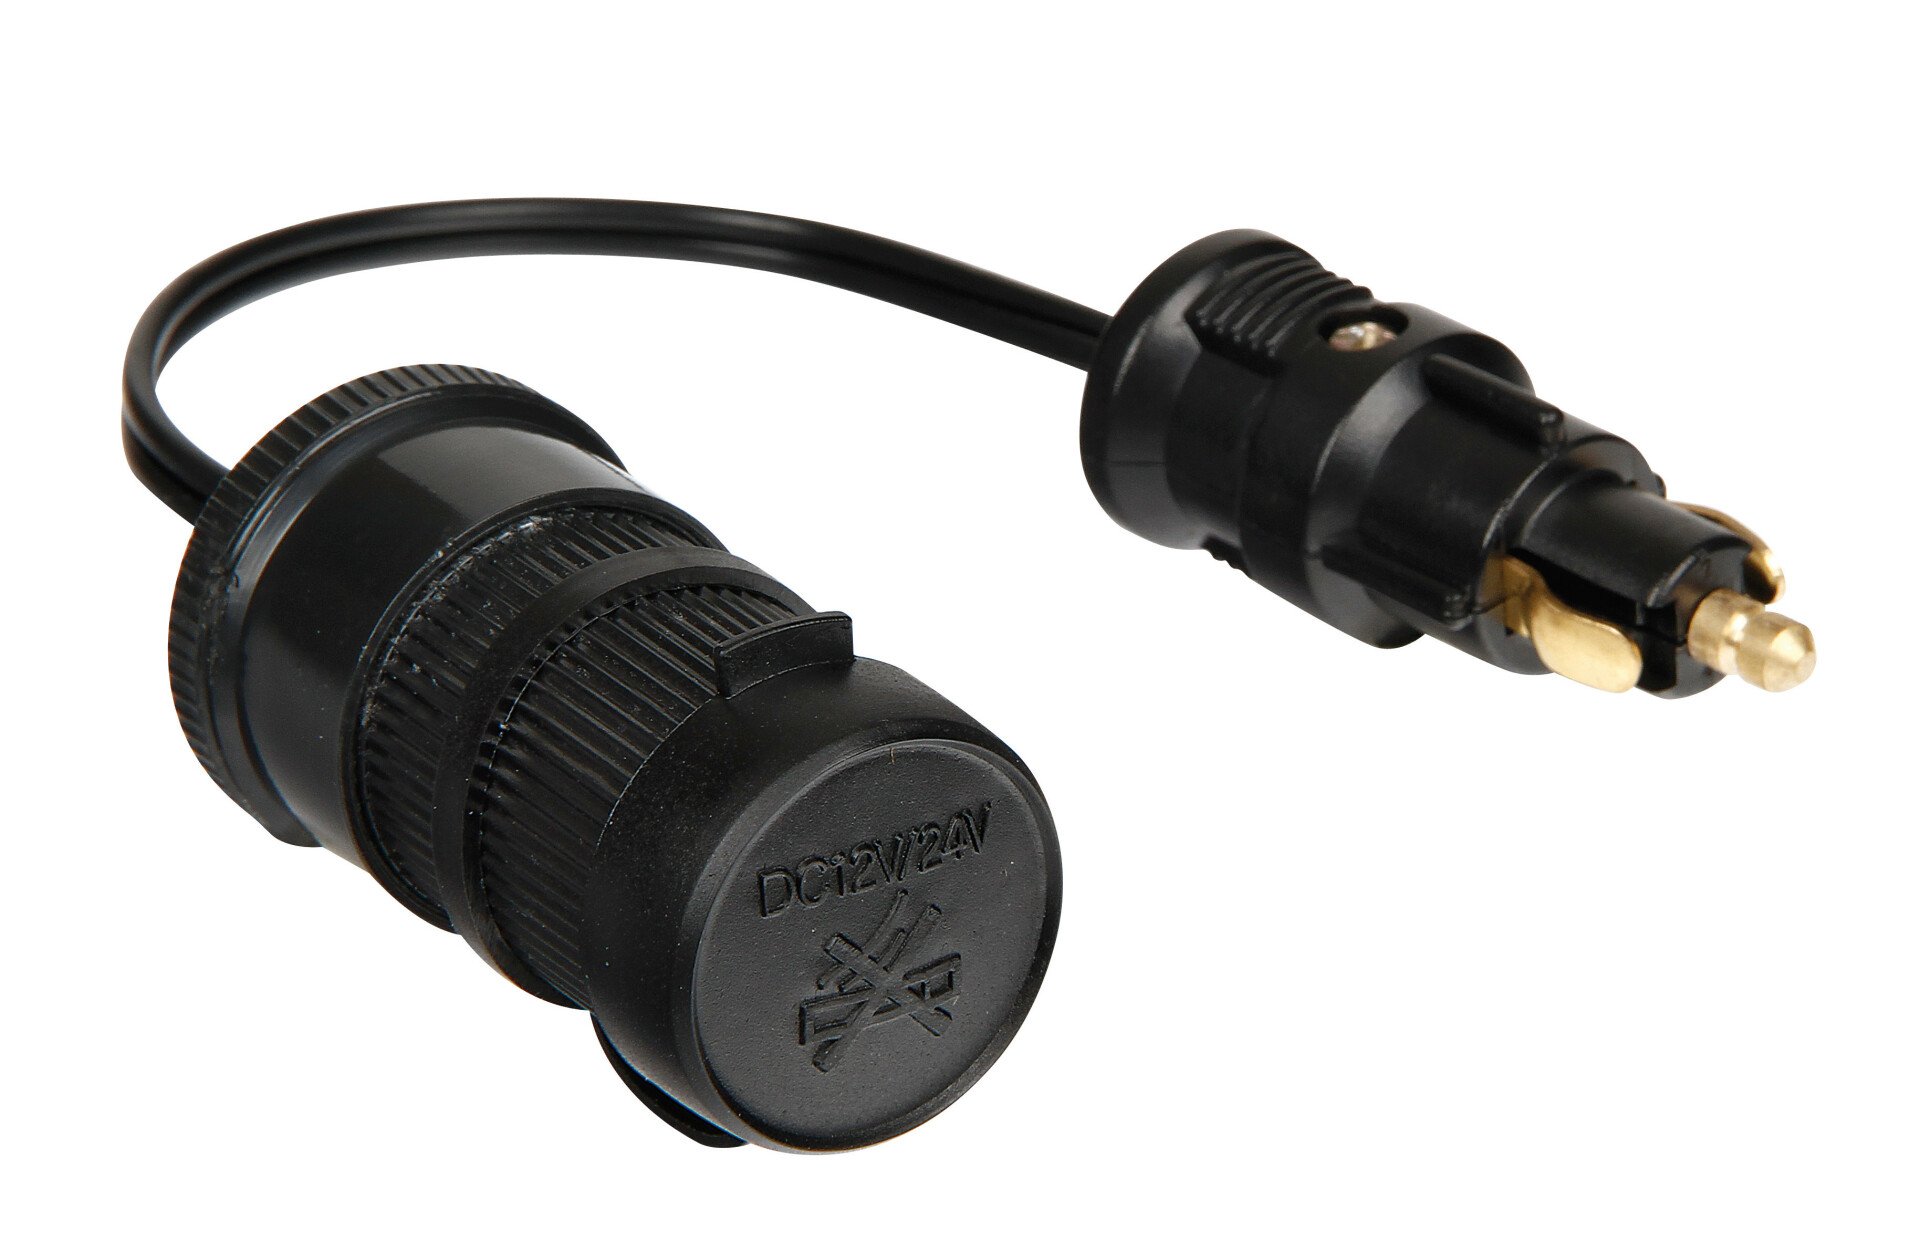 Power plug adapter, 12/24V - Resealed thumb